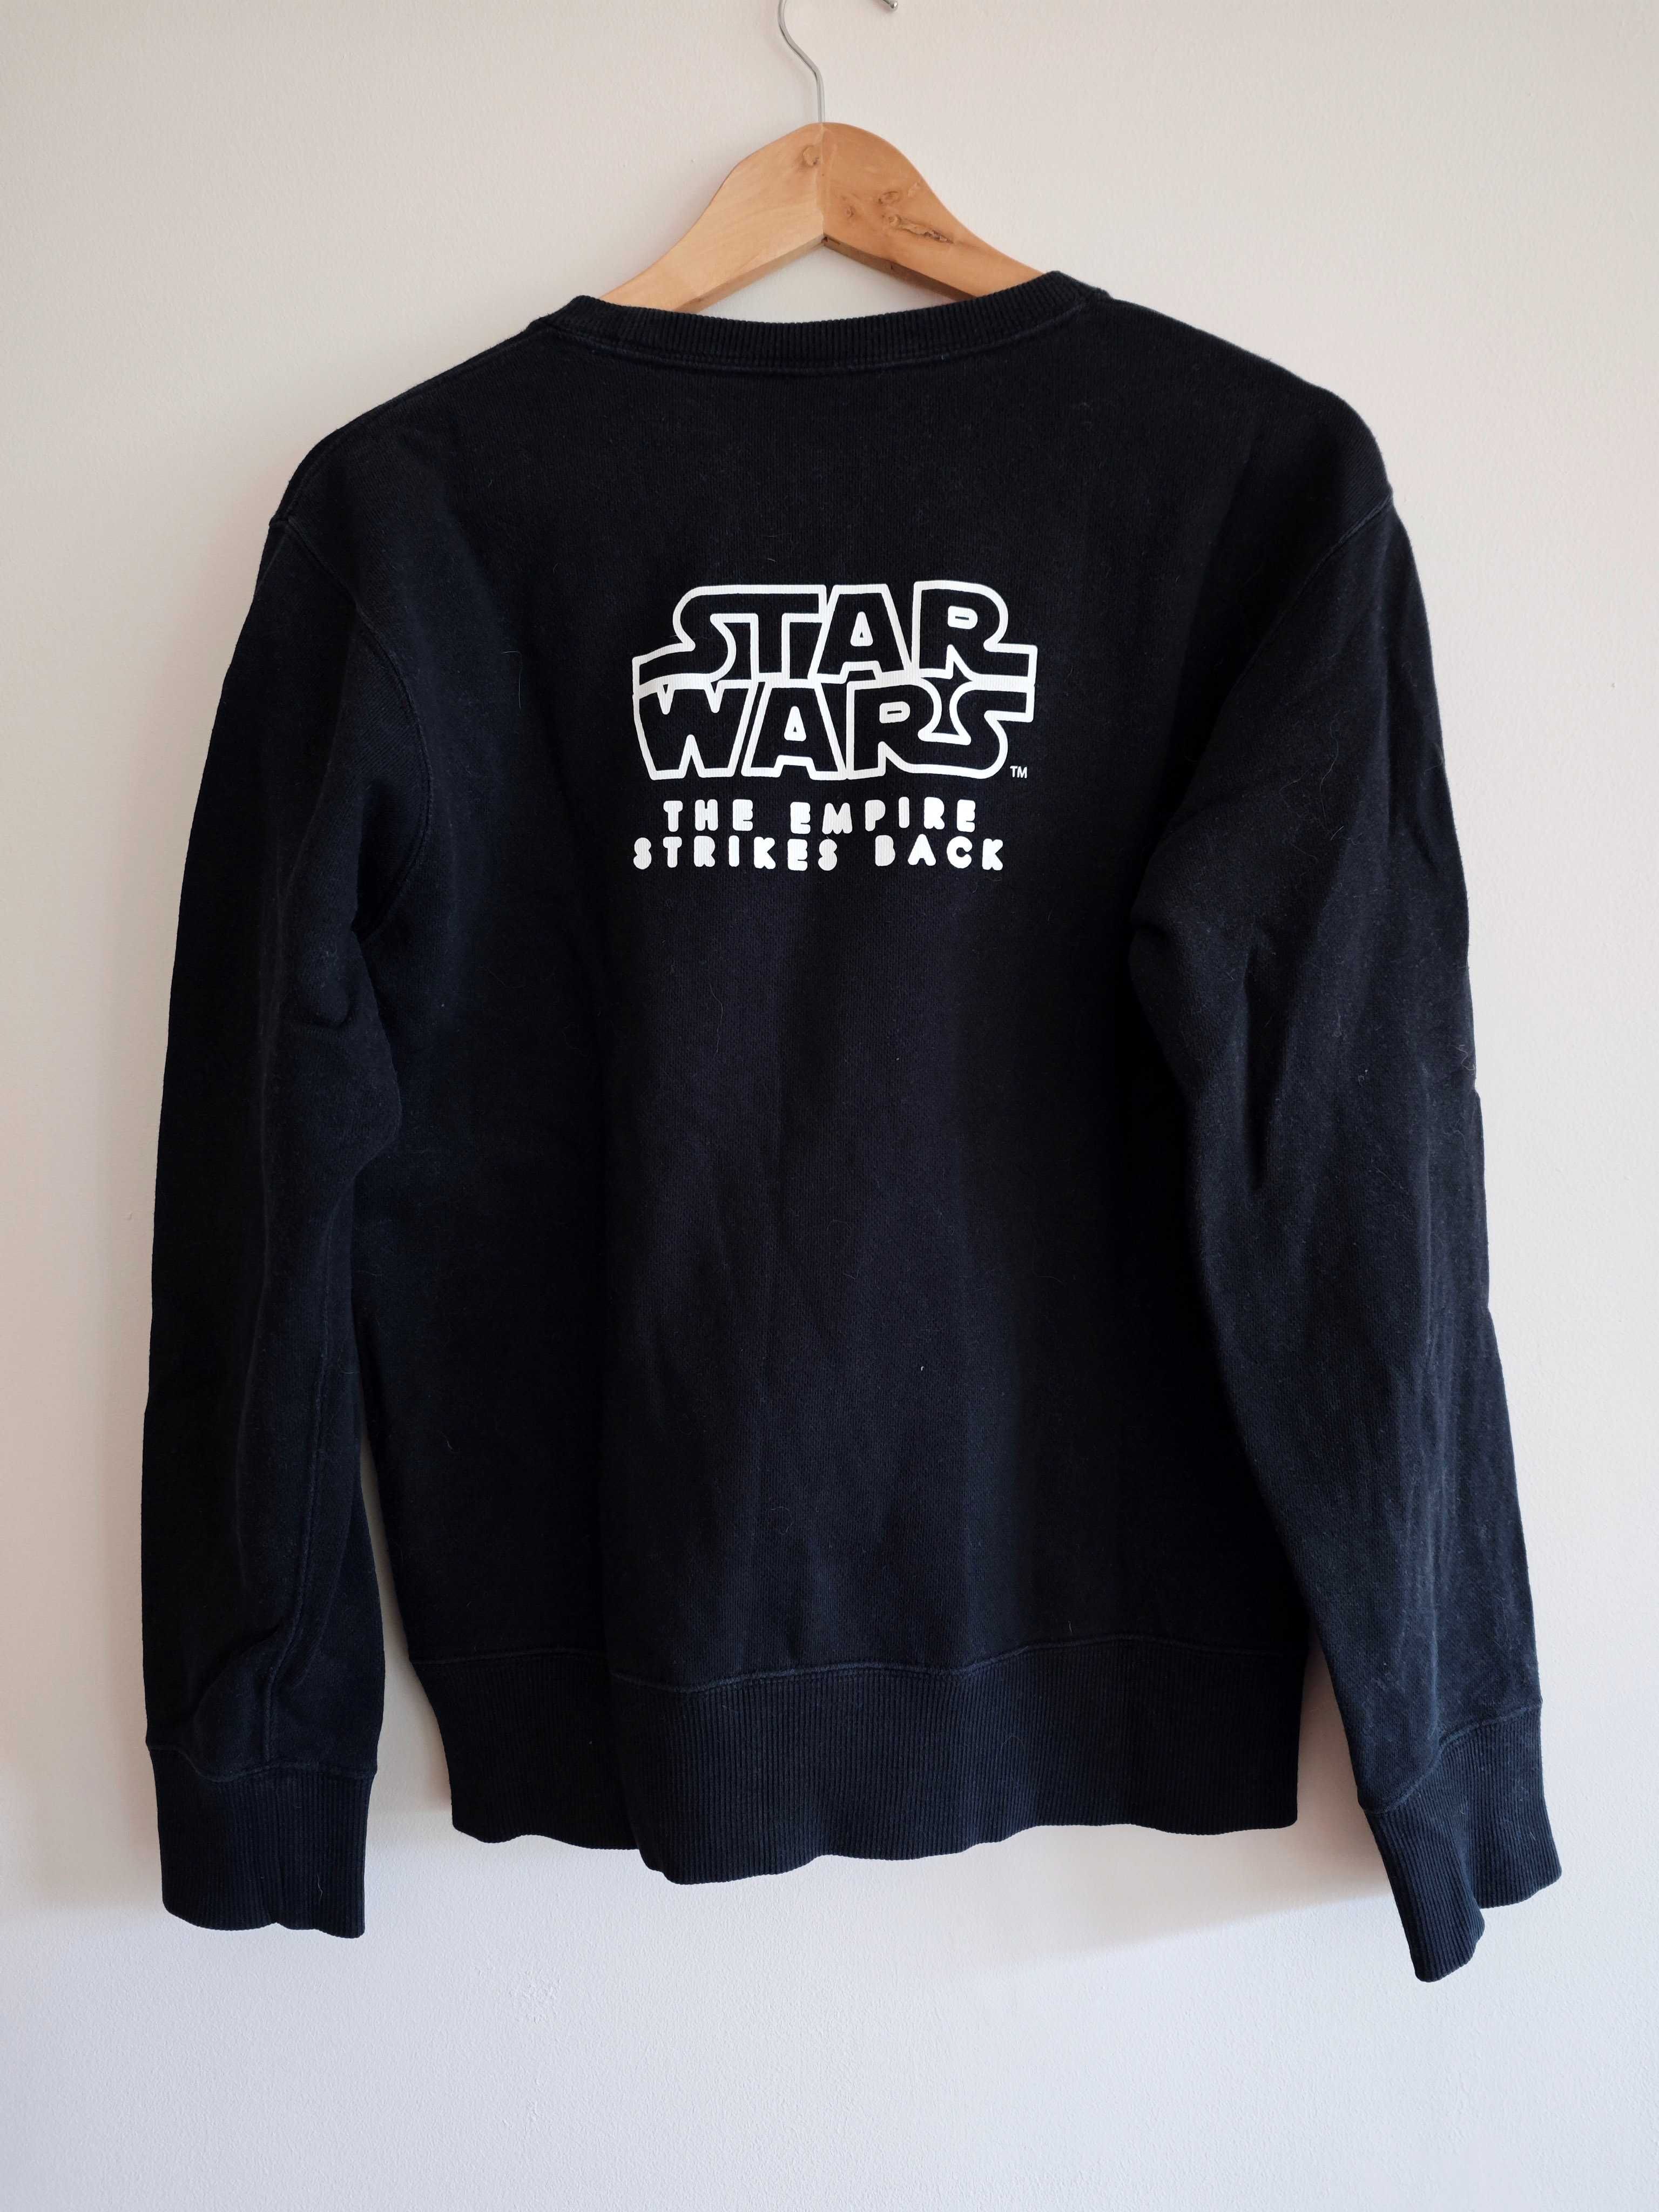 Uniqlo x Star Wars bluza sweater oversize unisex